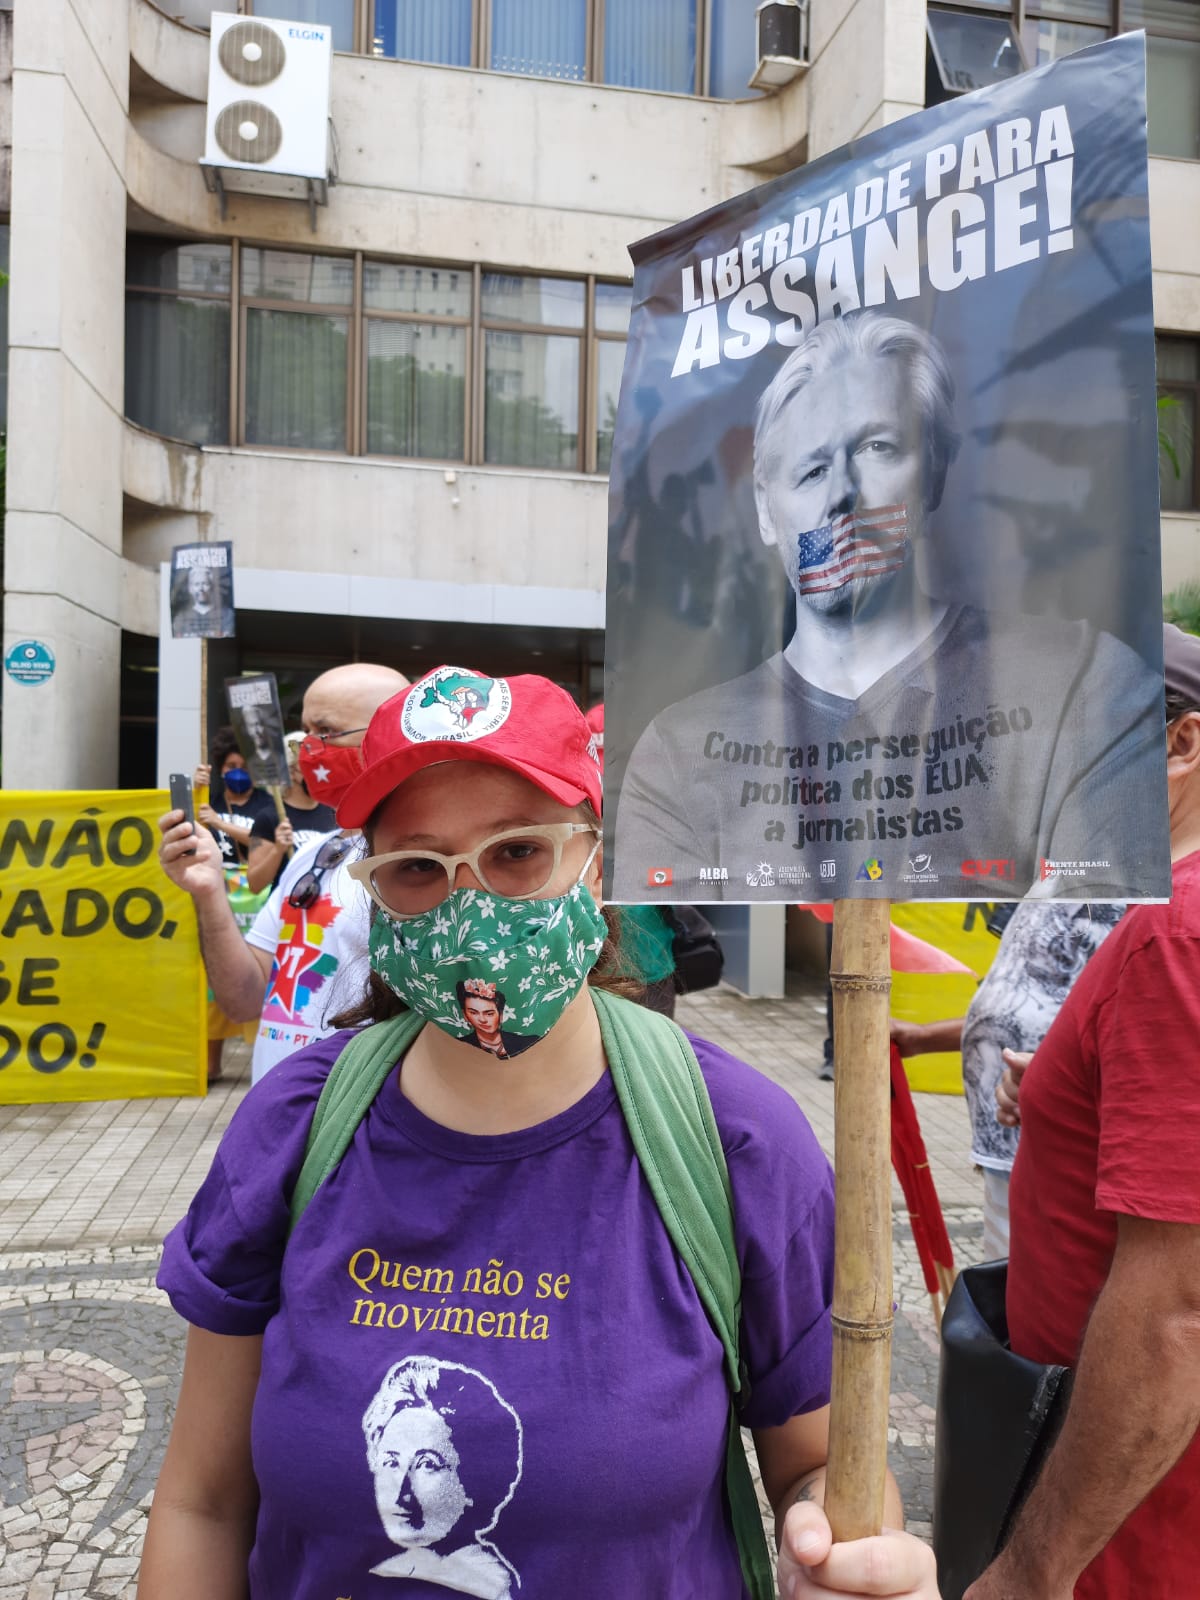 protest_photos:sem_terra_brazil_media_fmc8ignxwa0jvvx.jpg